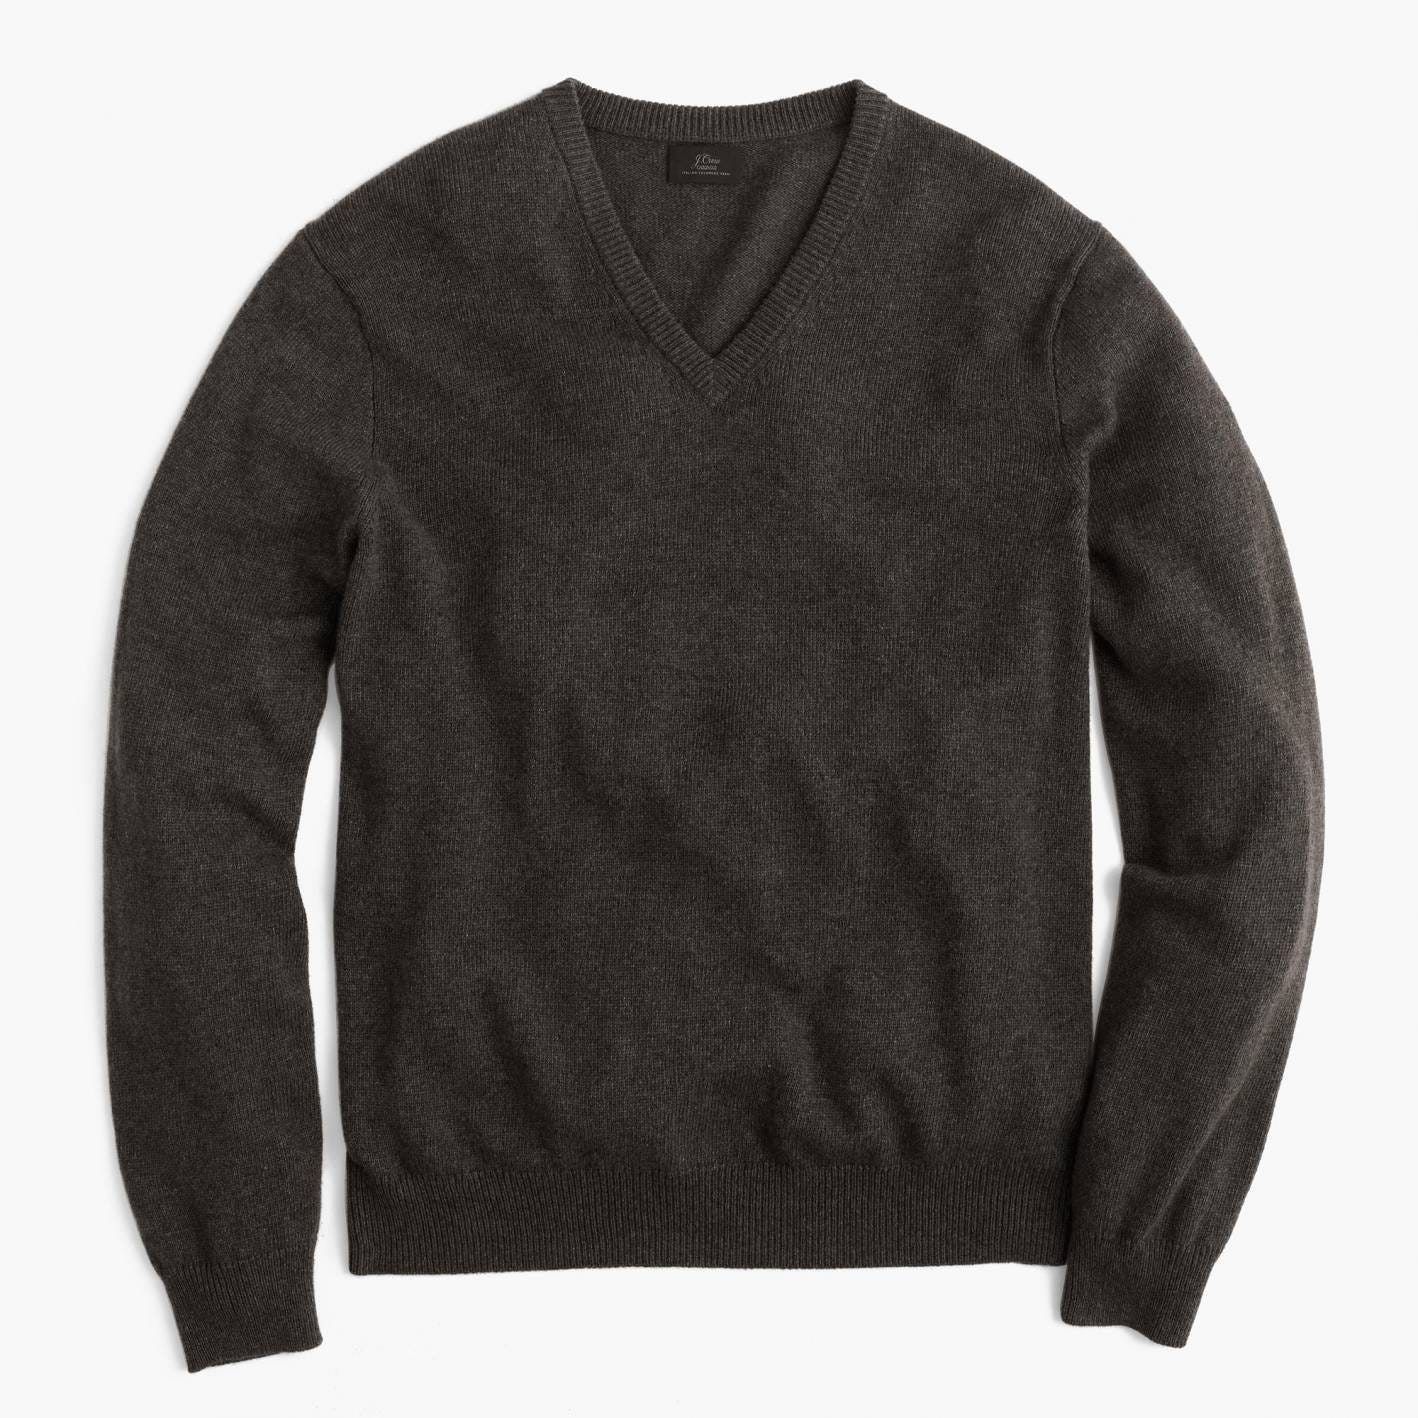 mens pullover sweater inspo